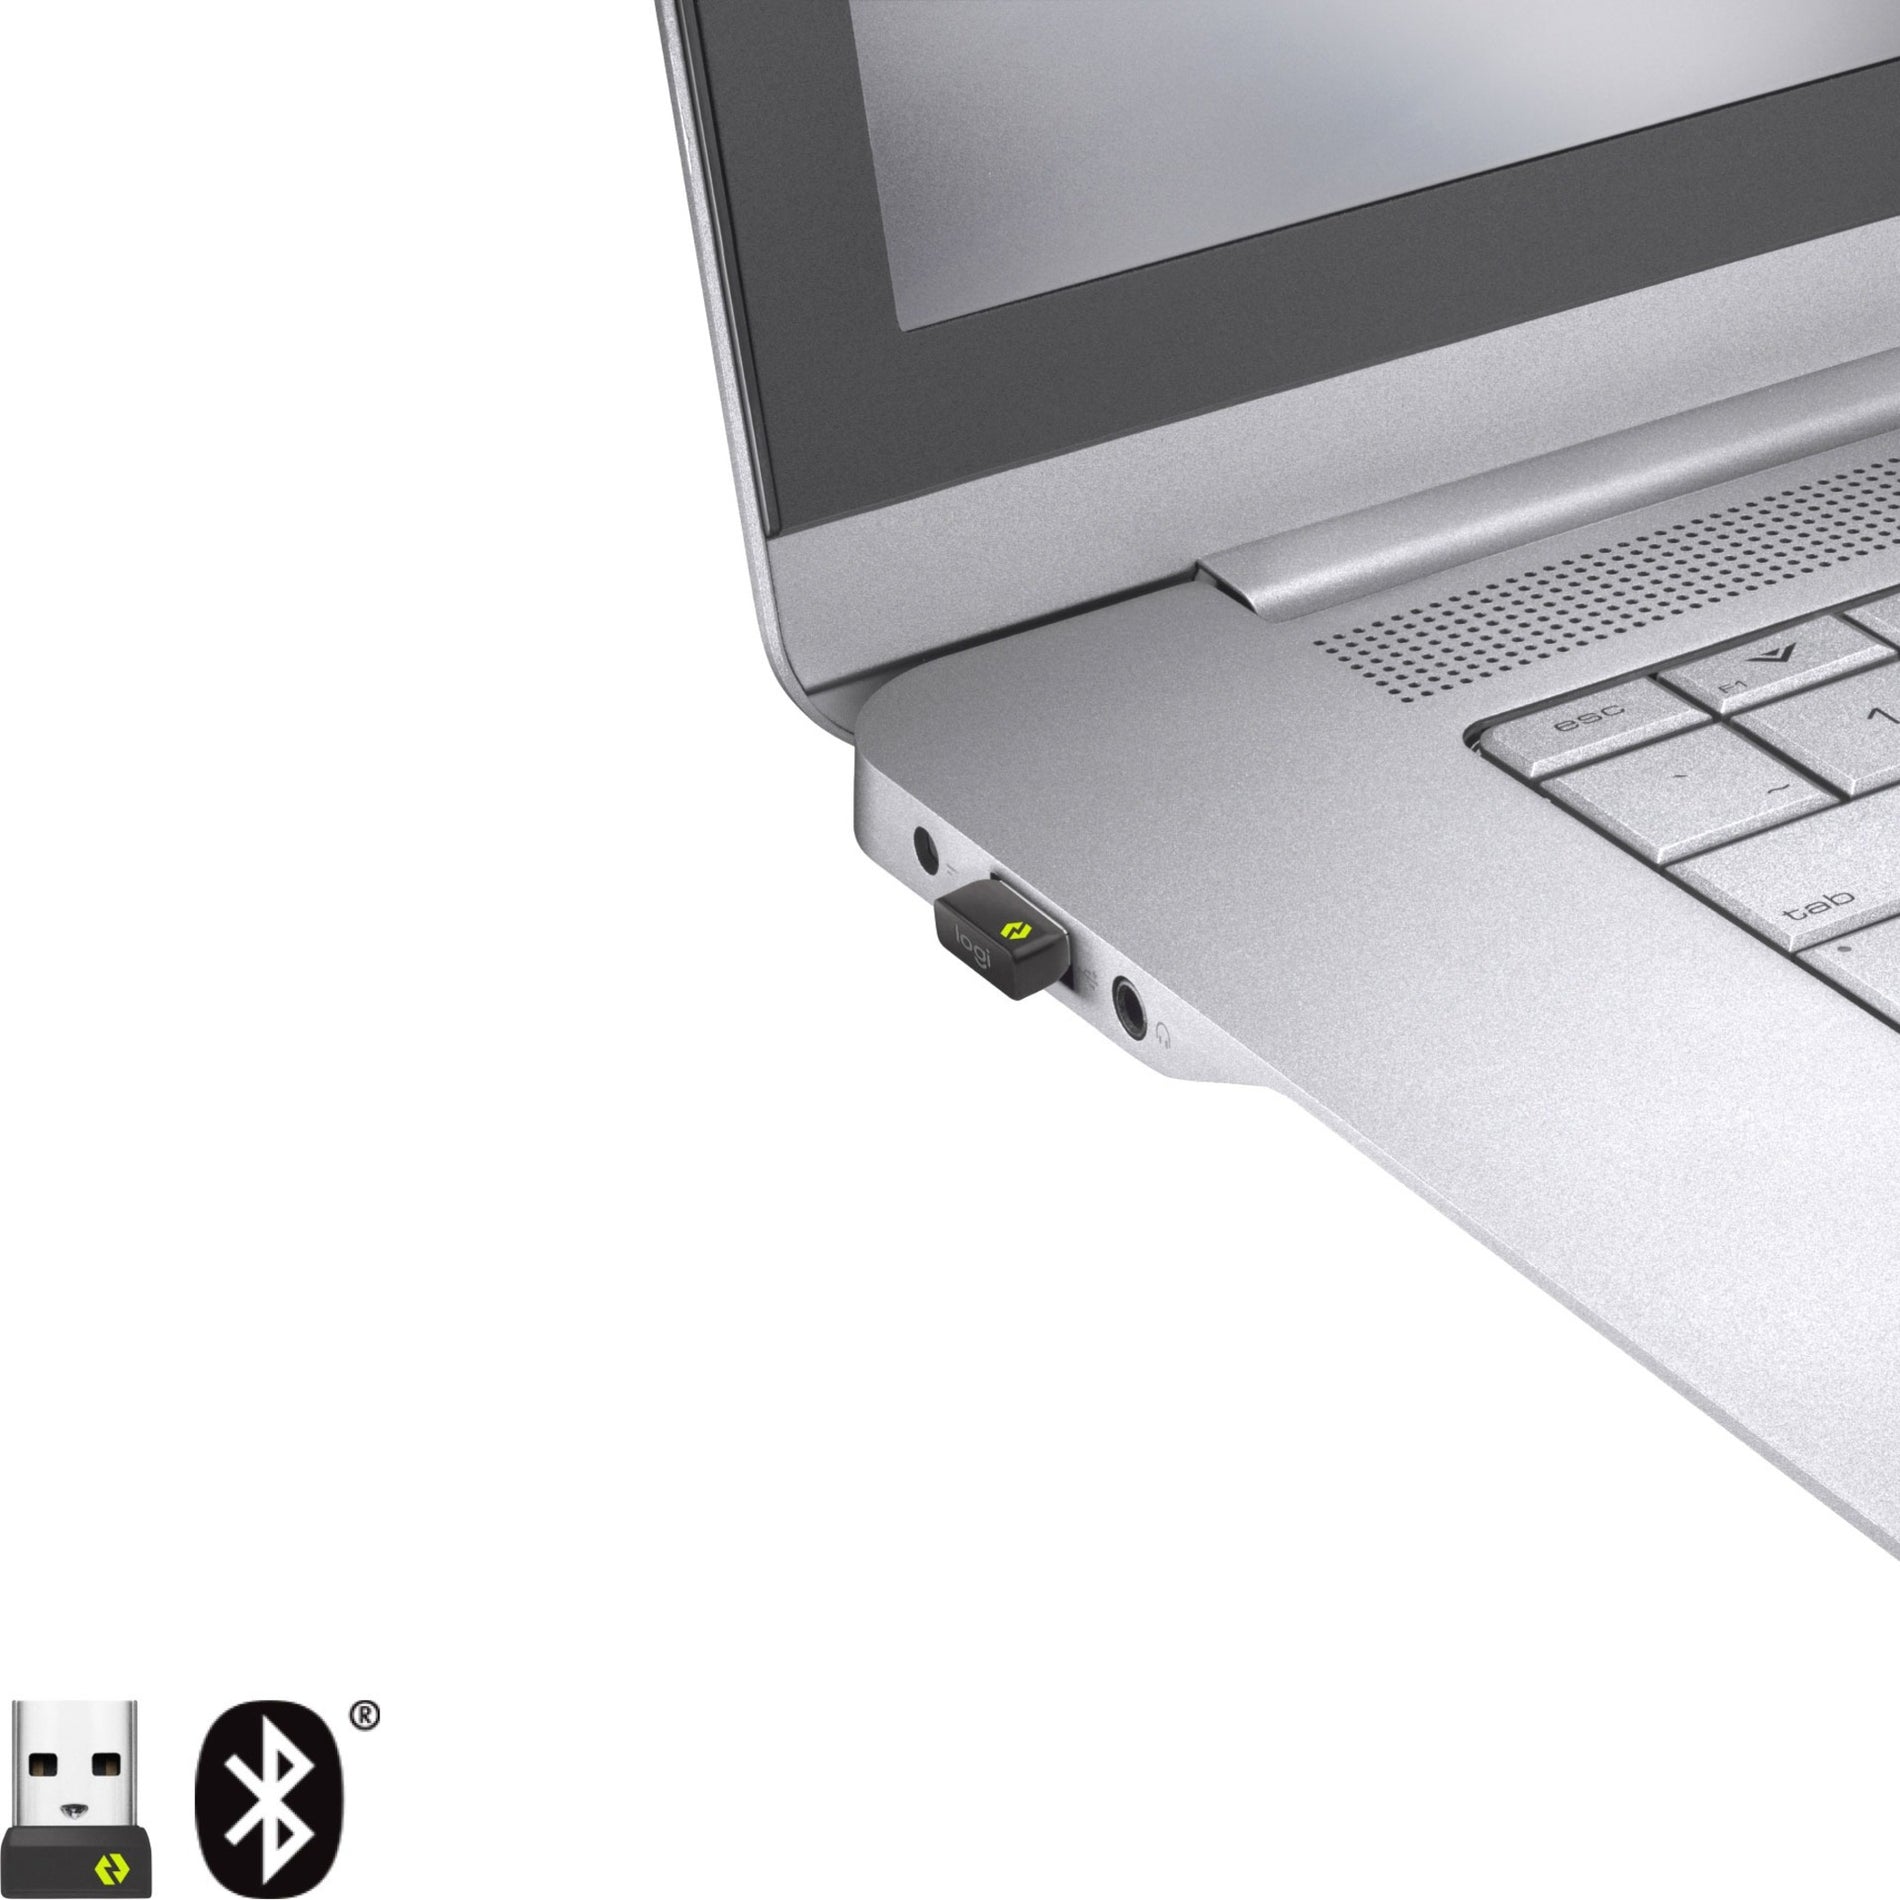 Logitech 920-010595 MX Keys Mini for Business Keyboard, BOLT (Pale Grey) Bolt+BT Dual Connectivity